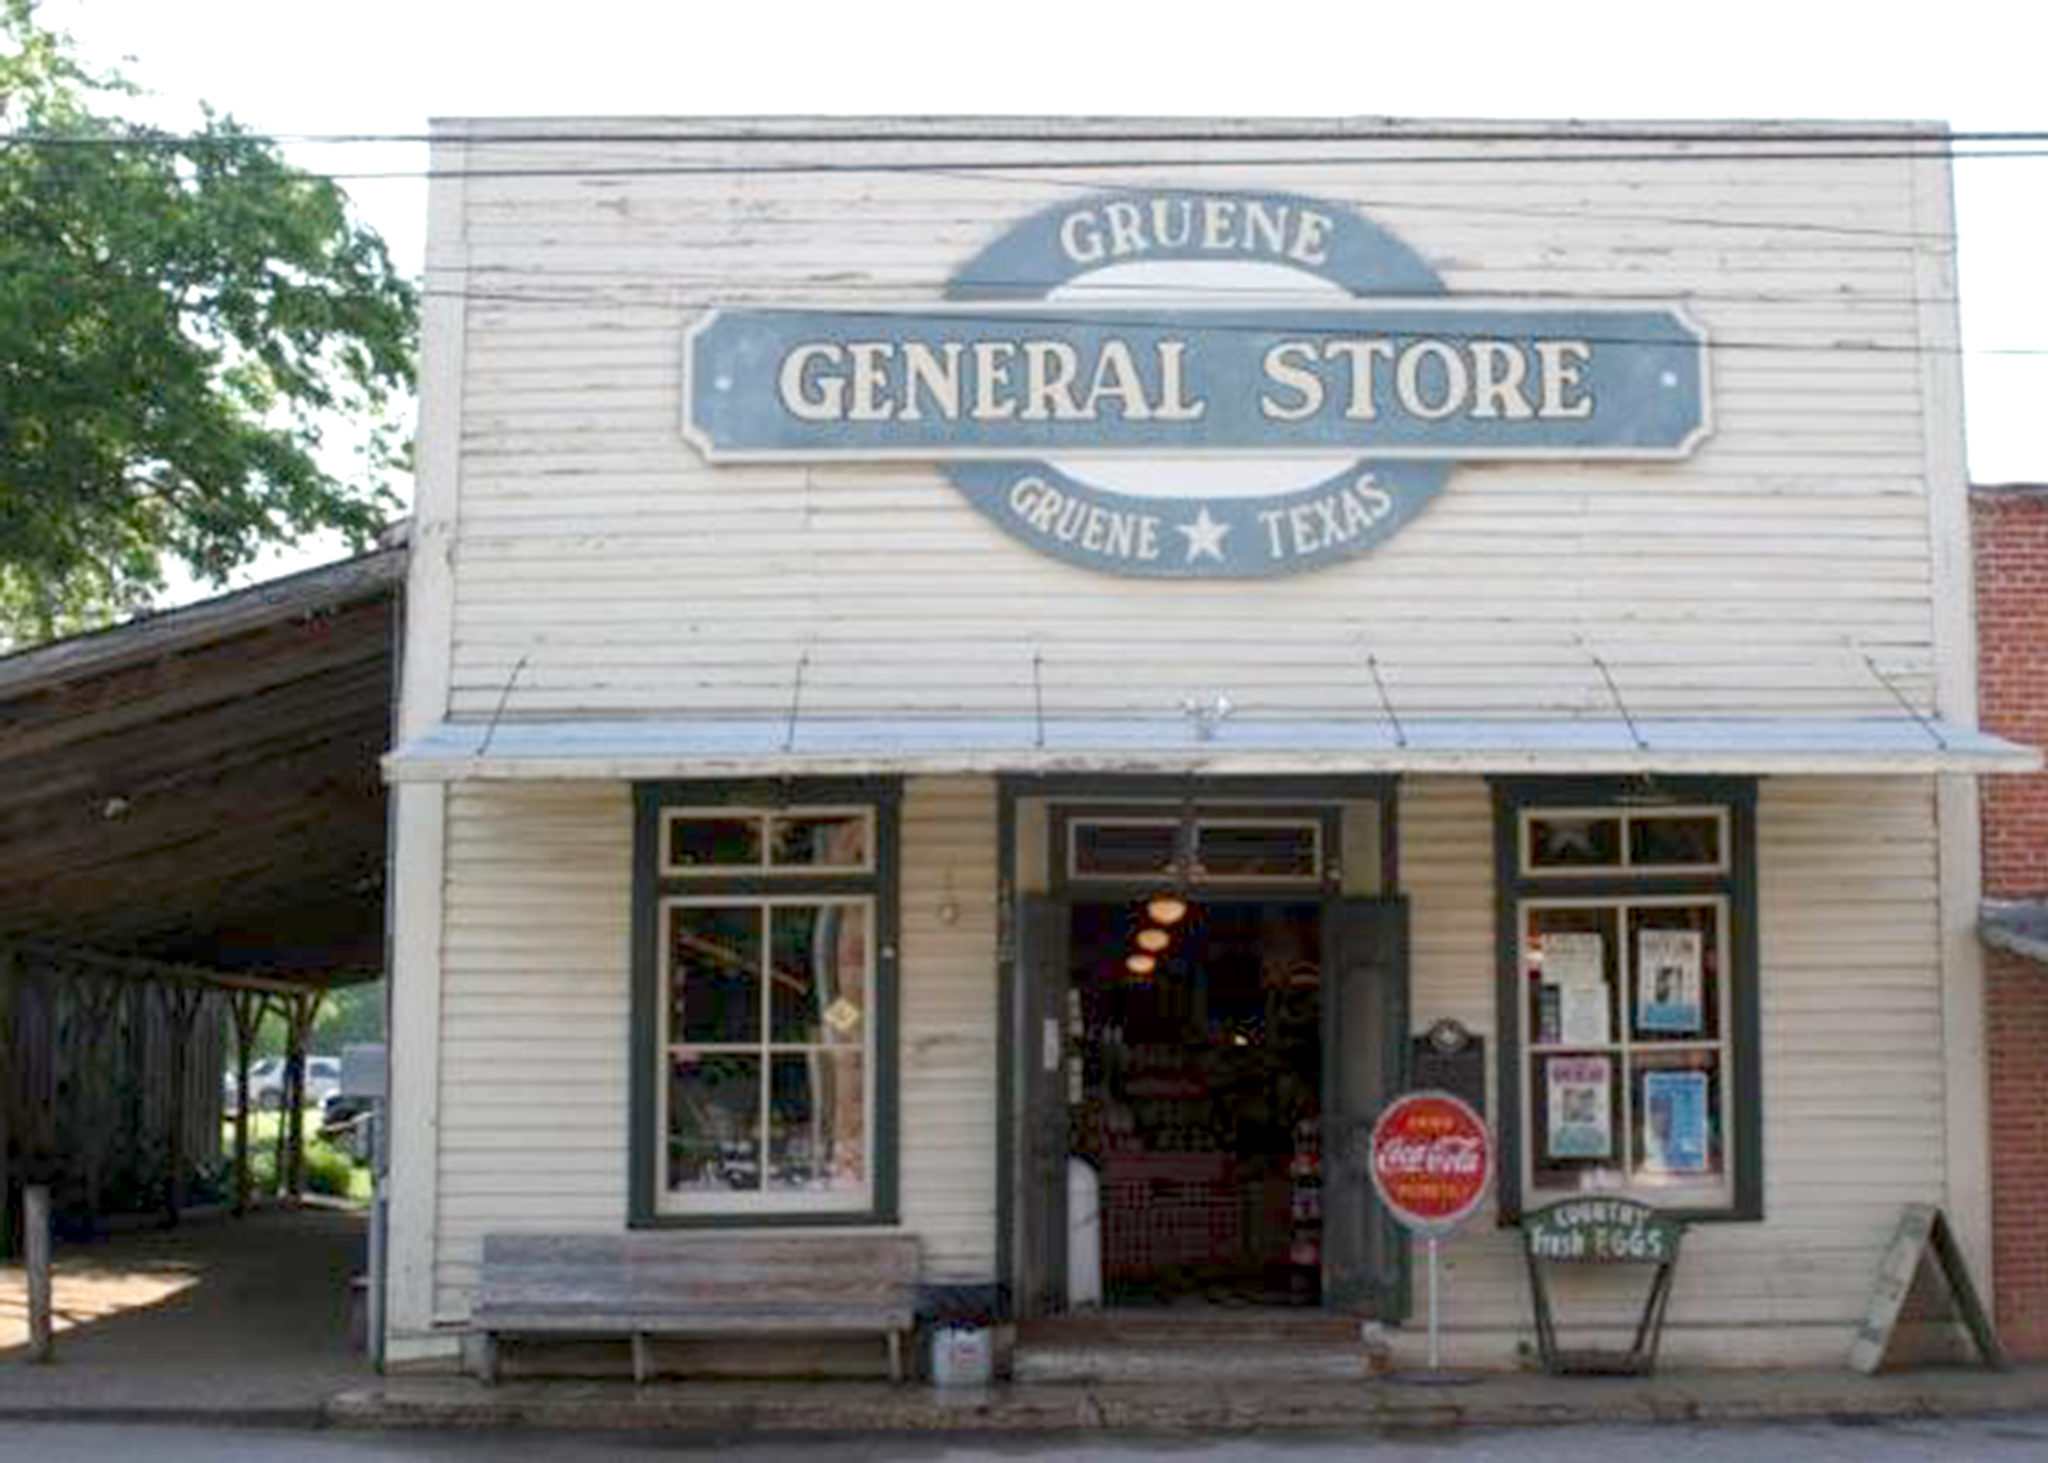 Gruene General Store storefront